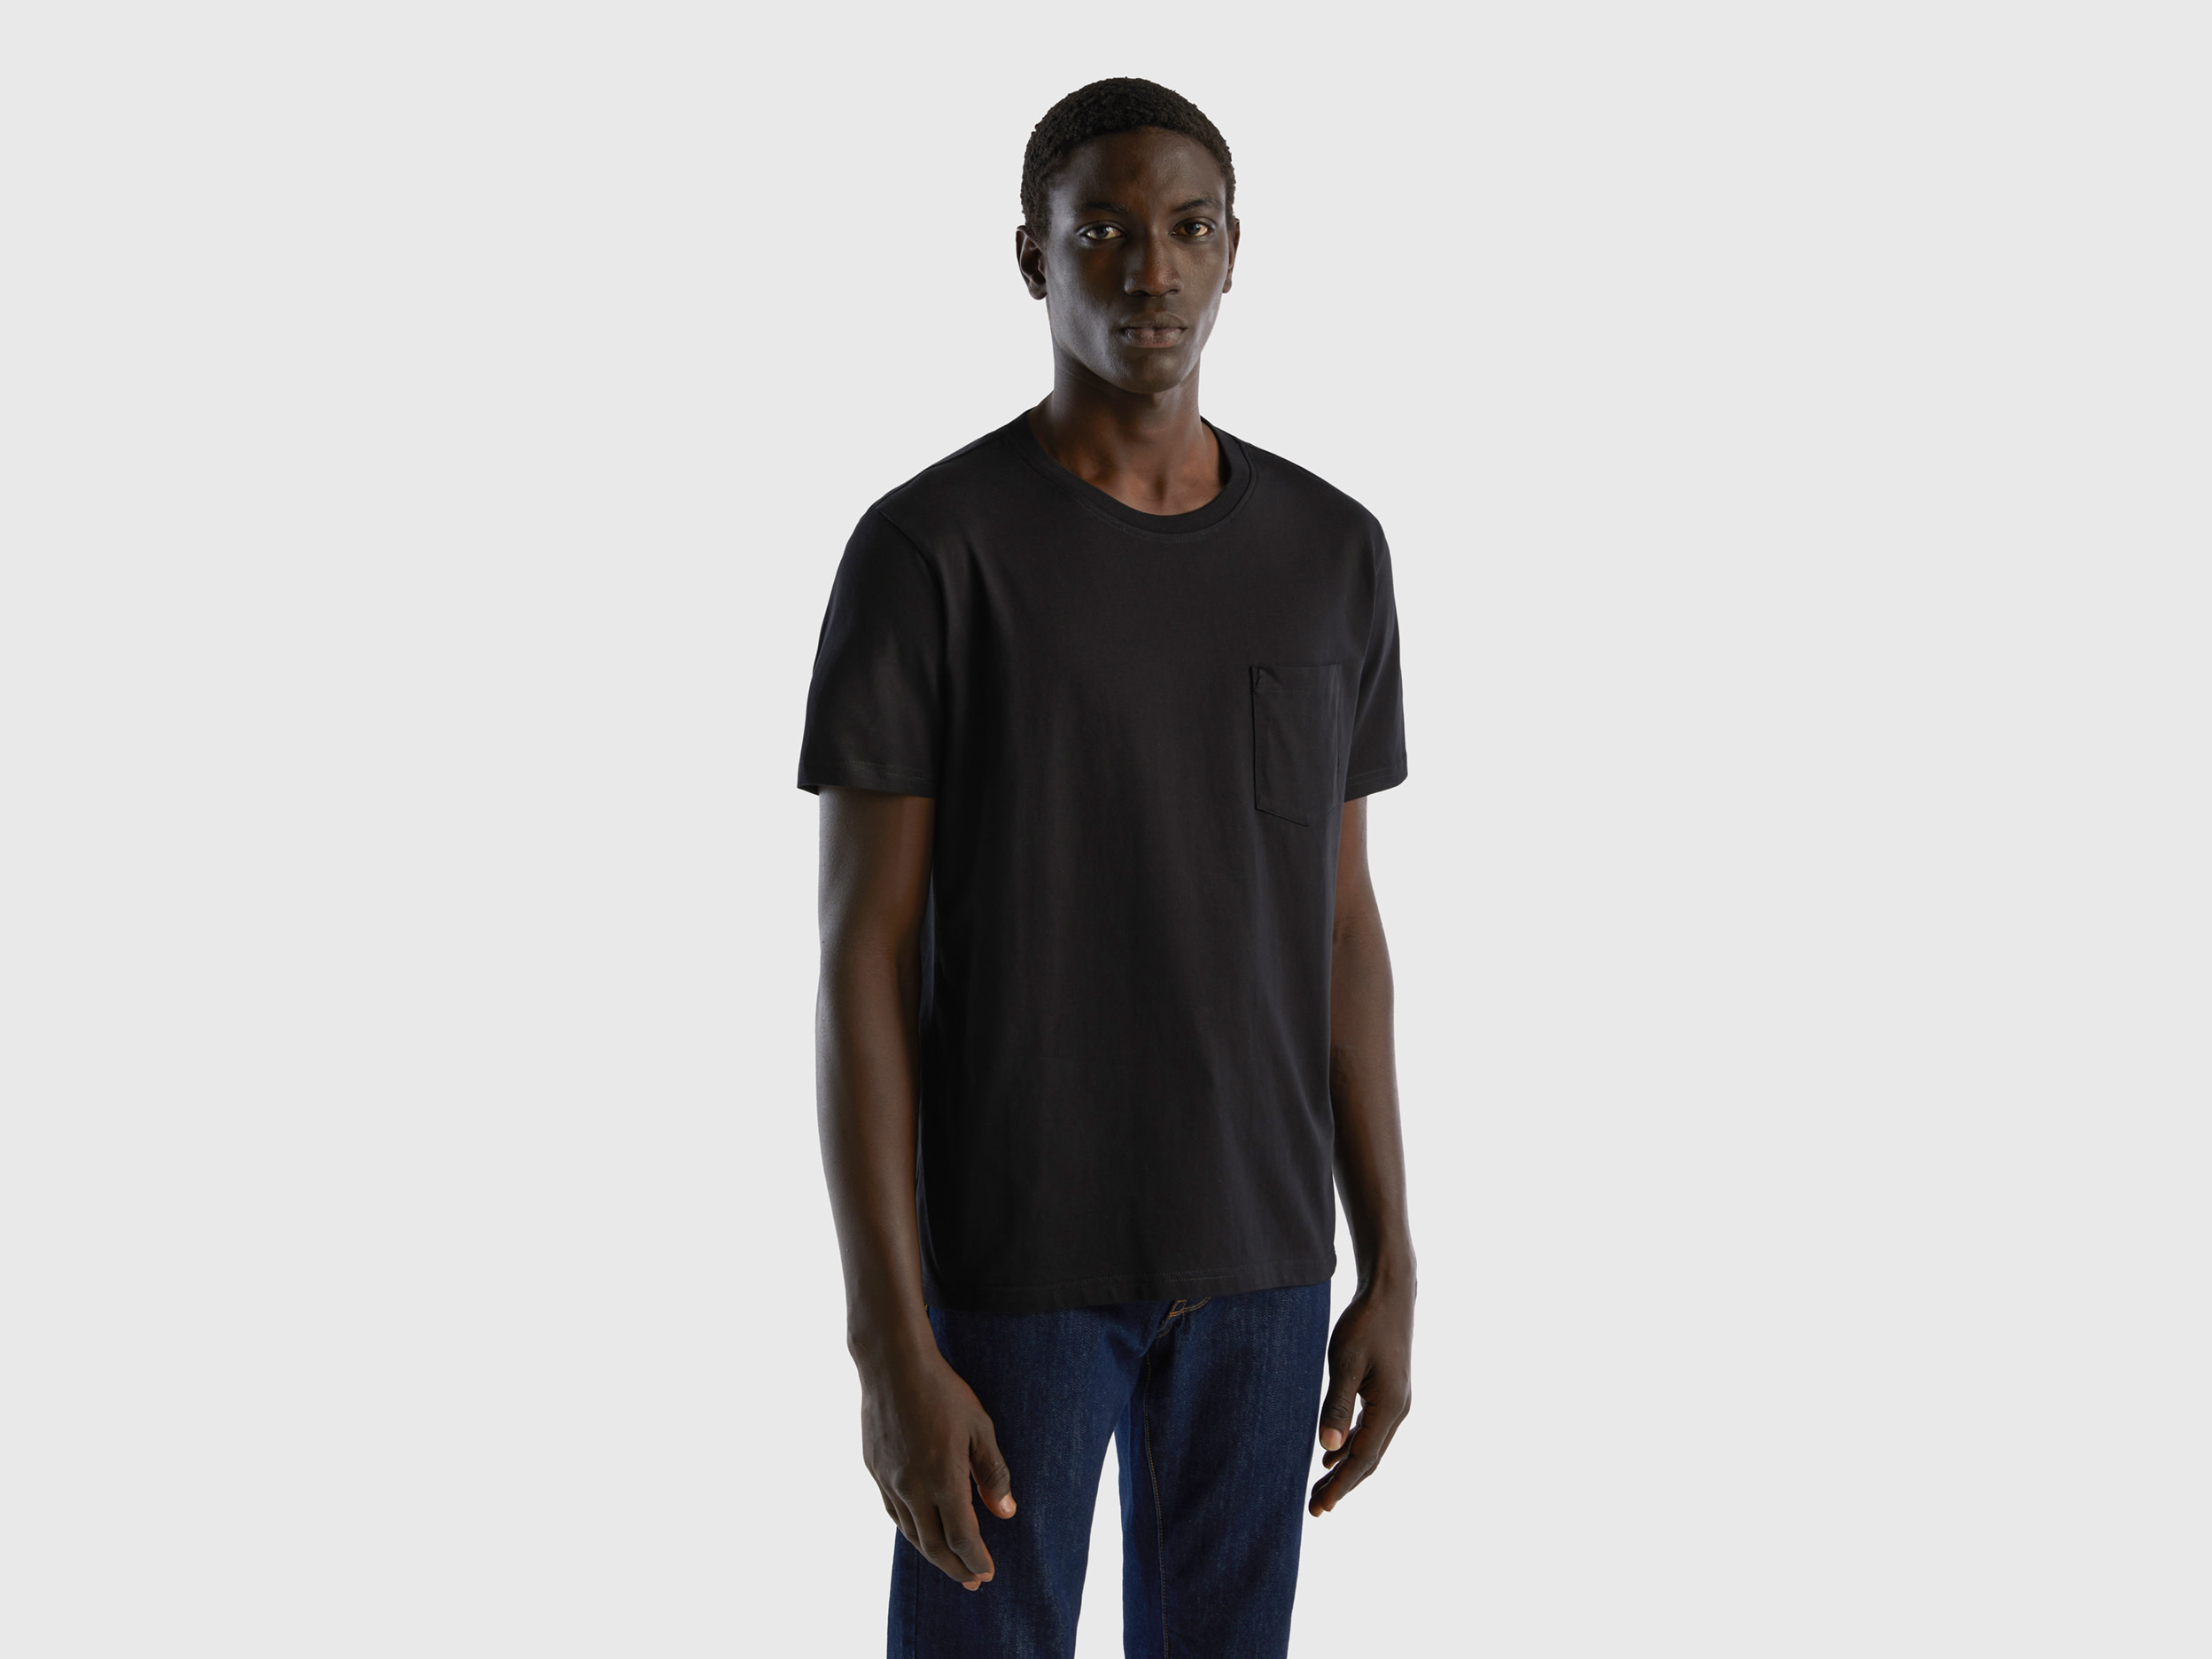 Benetton, 100% Cotton T-shirt With Pocket, size XS, Black, Men